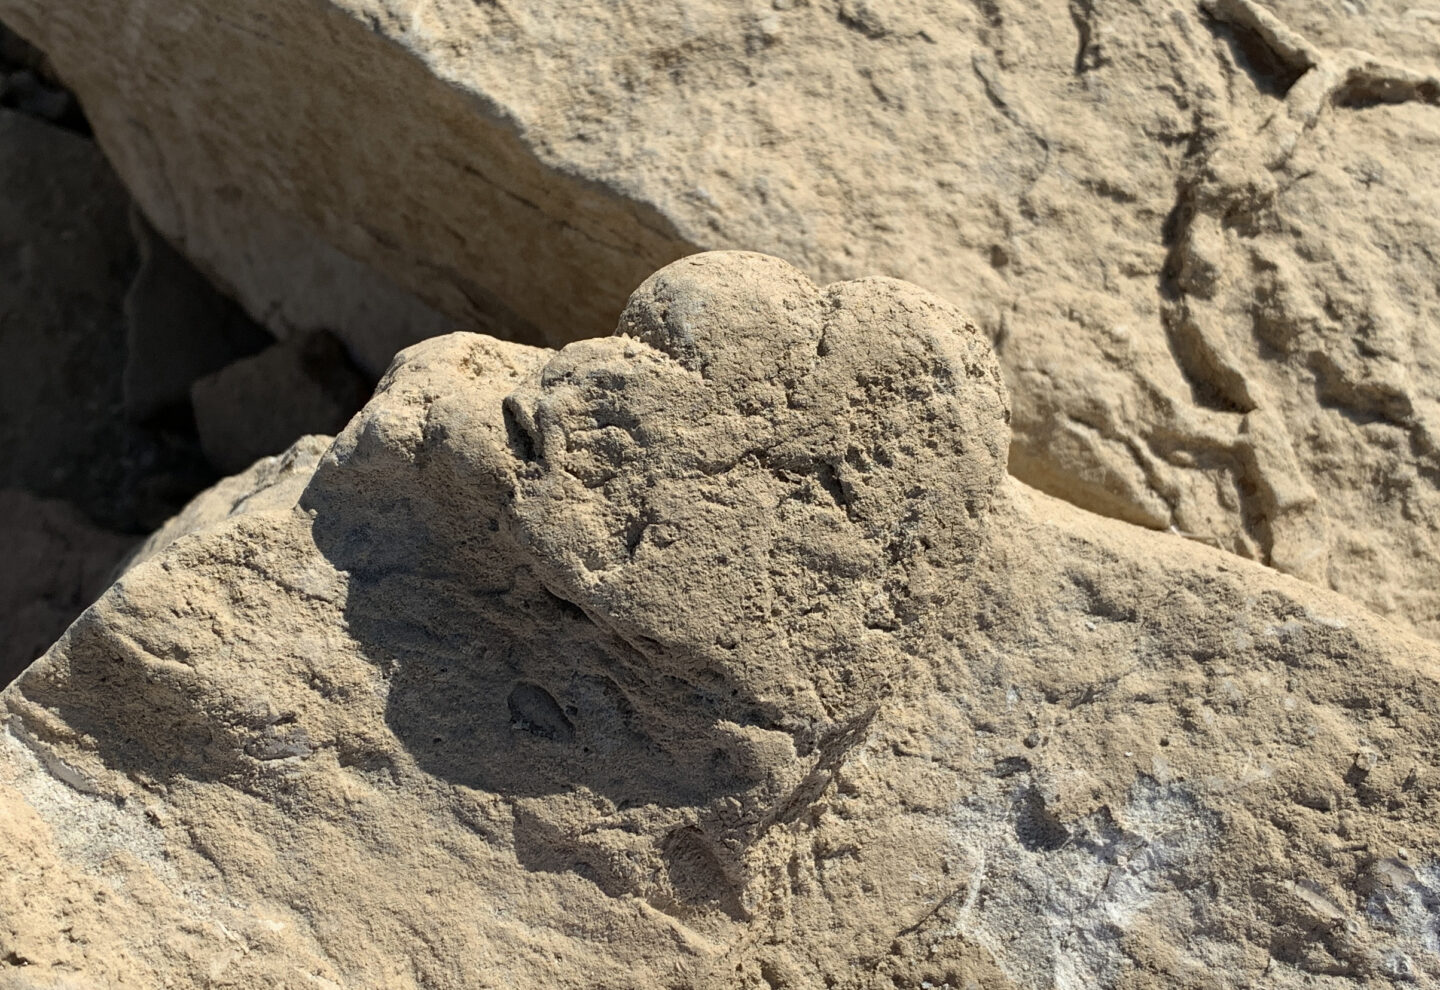 The world's smallest stegosaur footprint (less than 6 cm long),